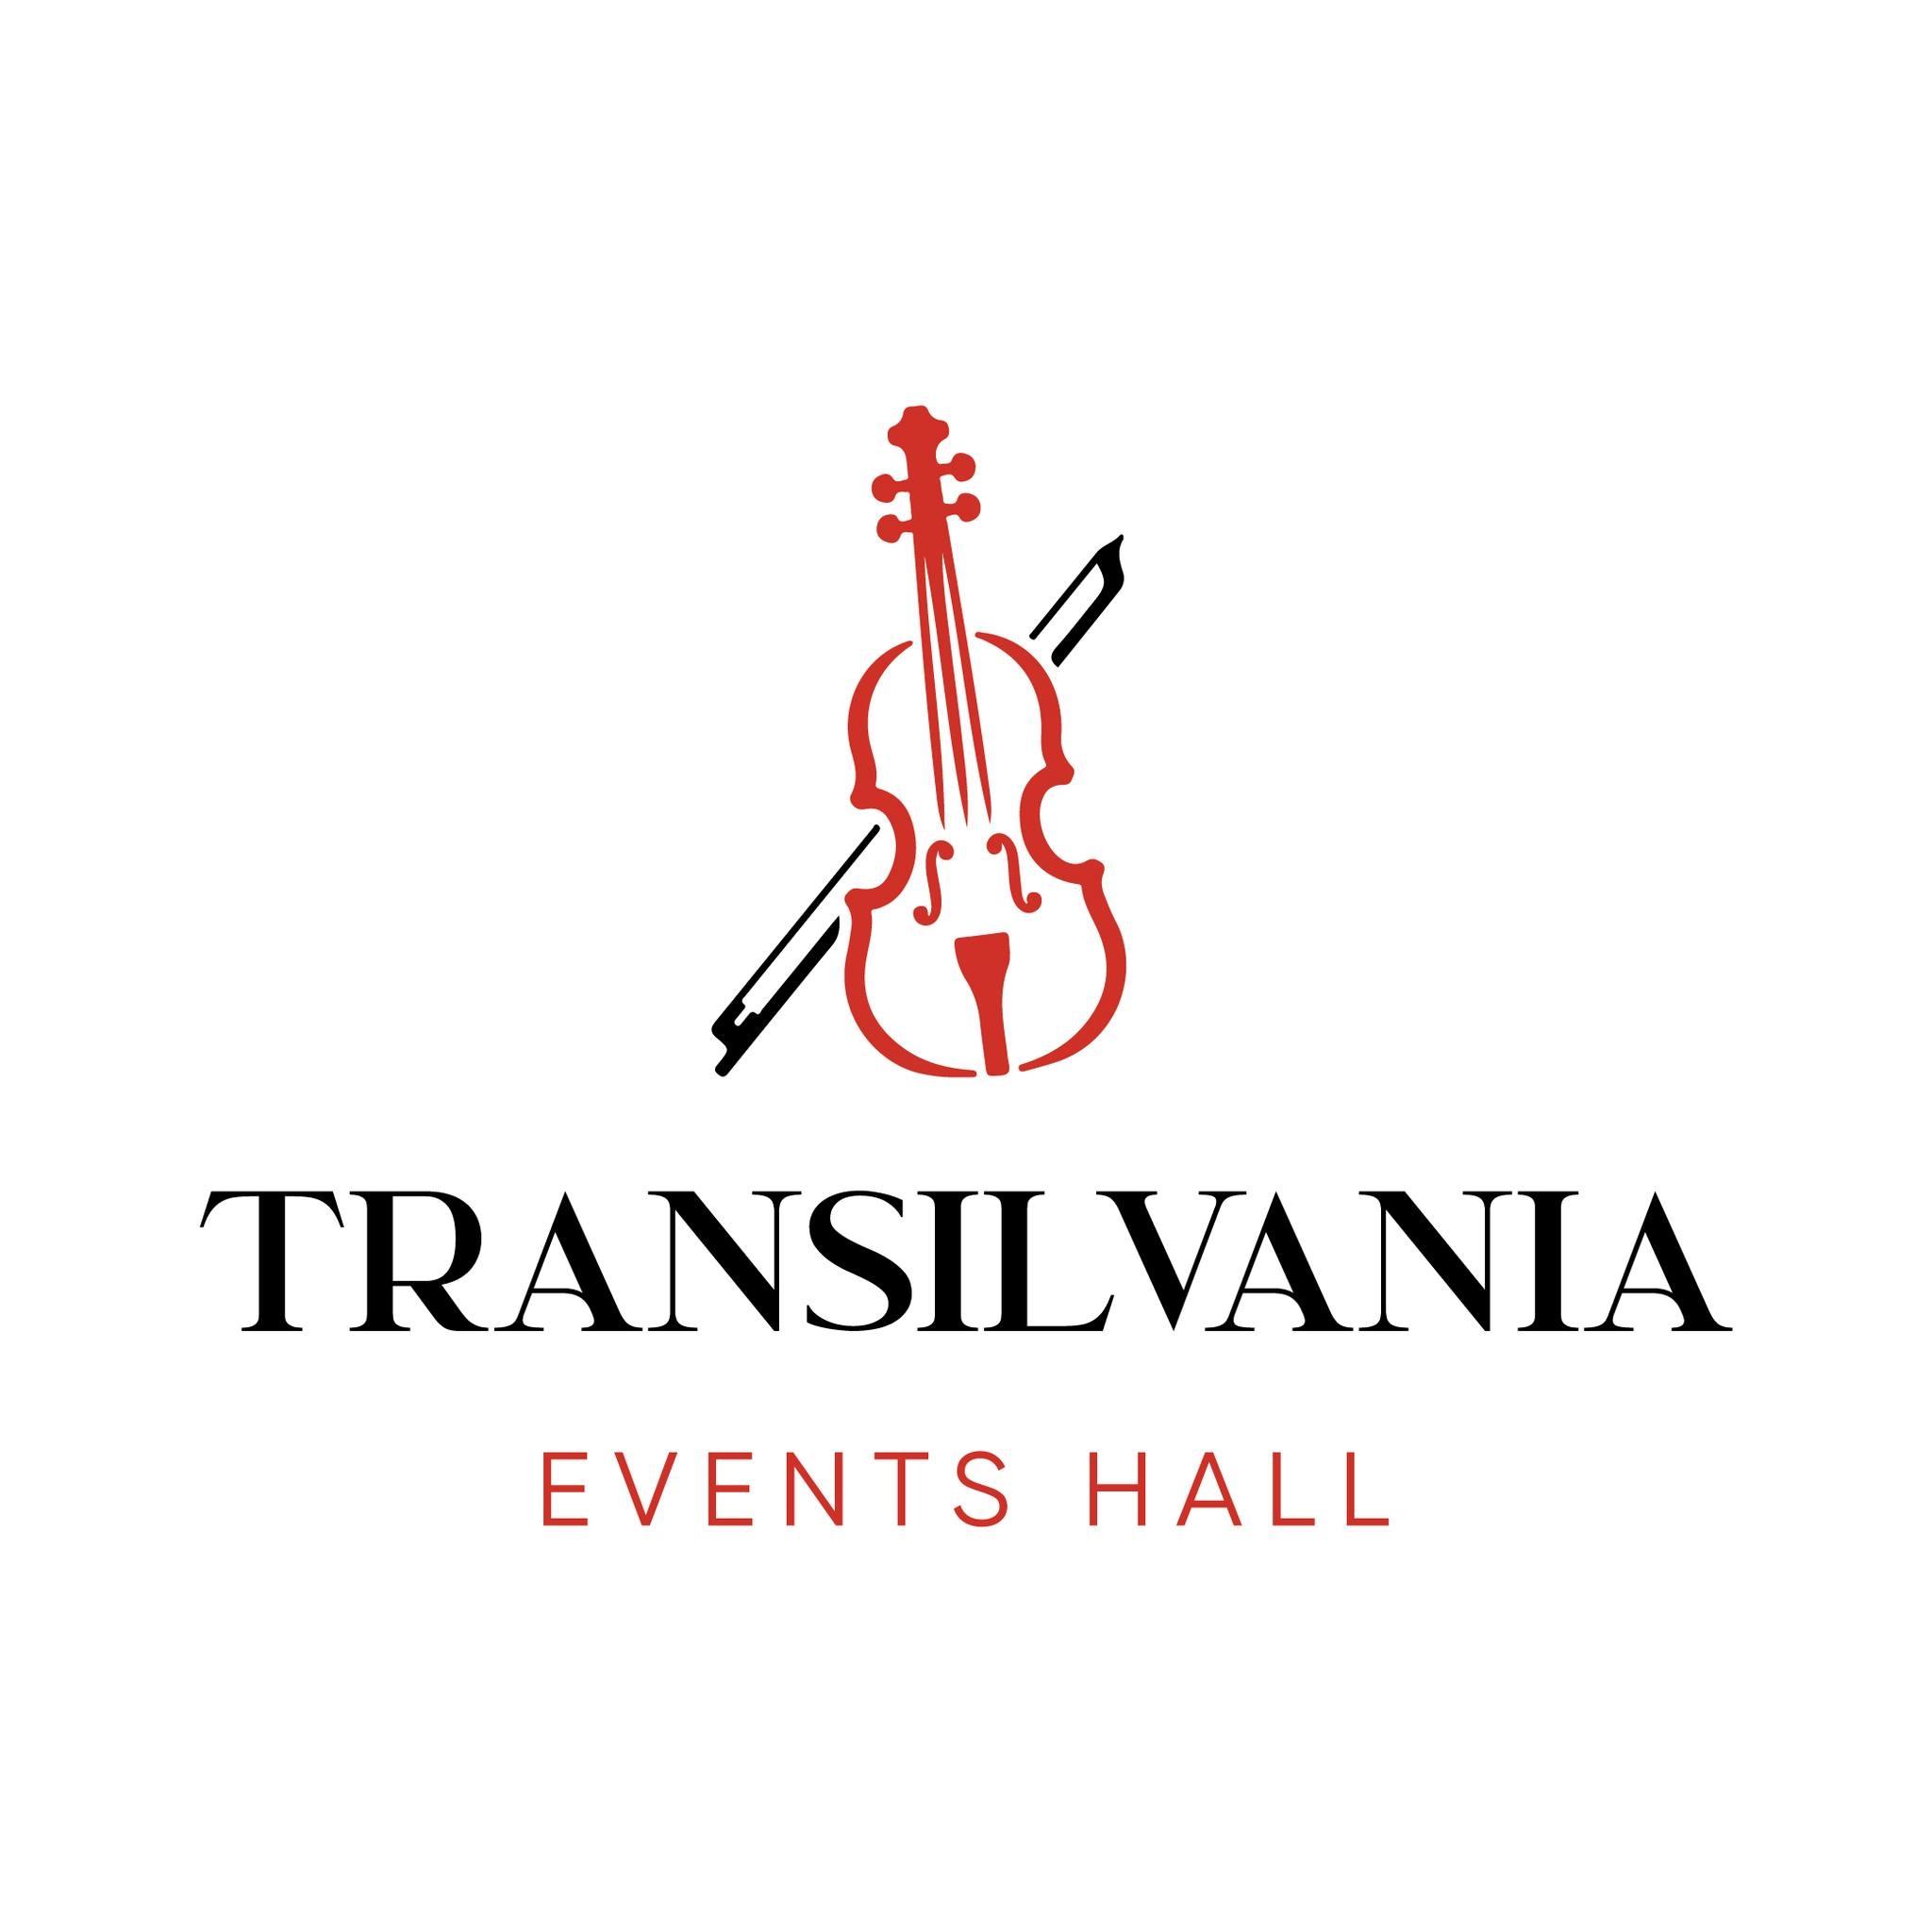 Transilvania Events Hall